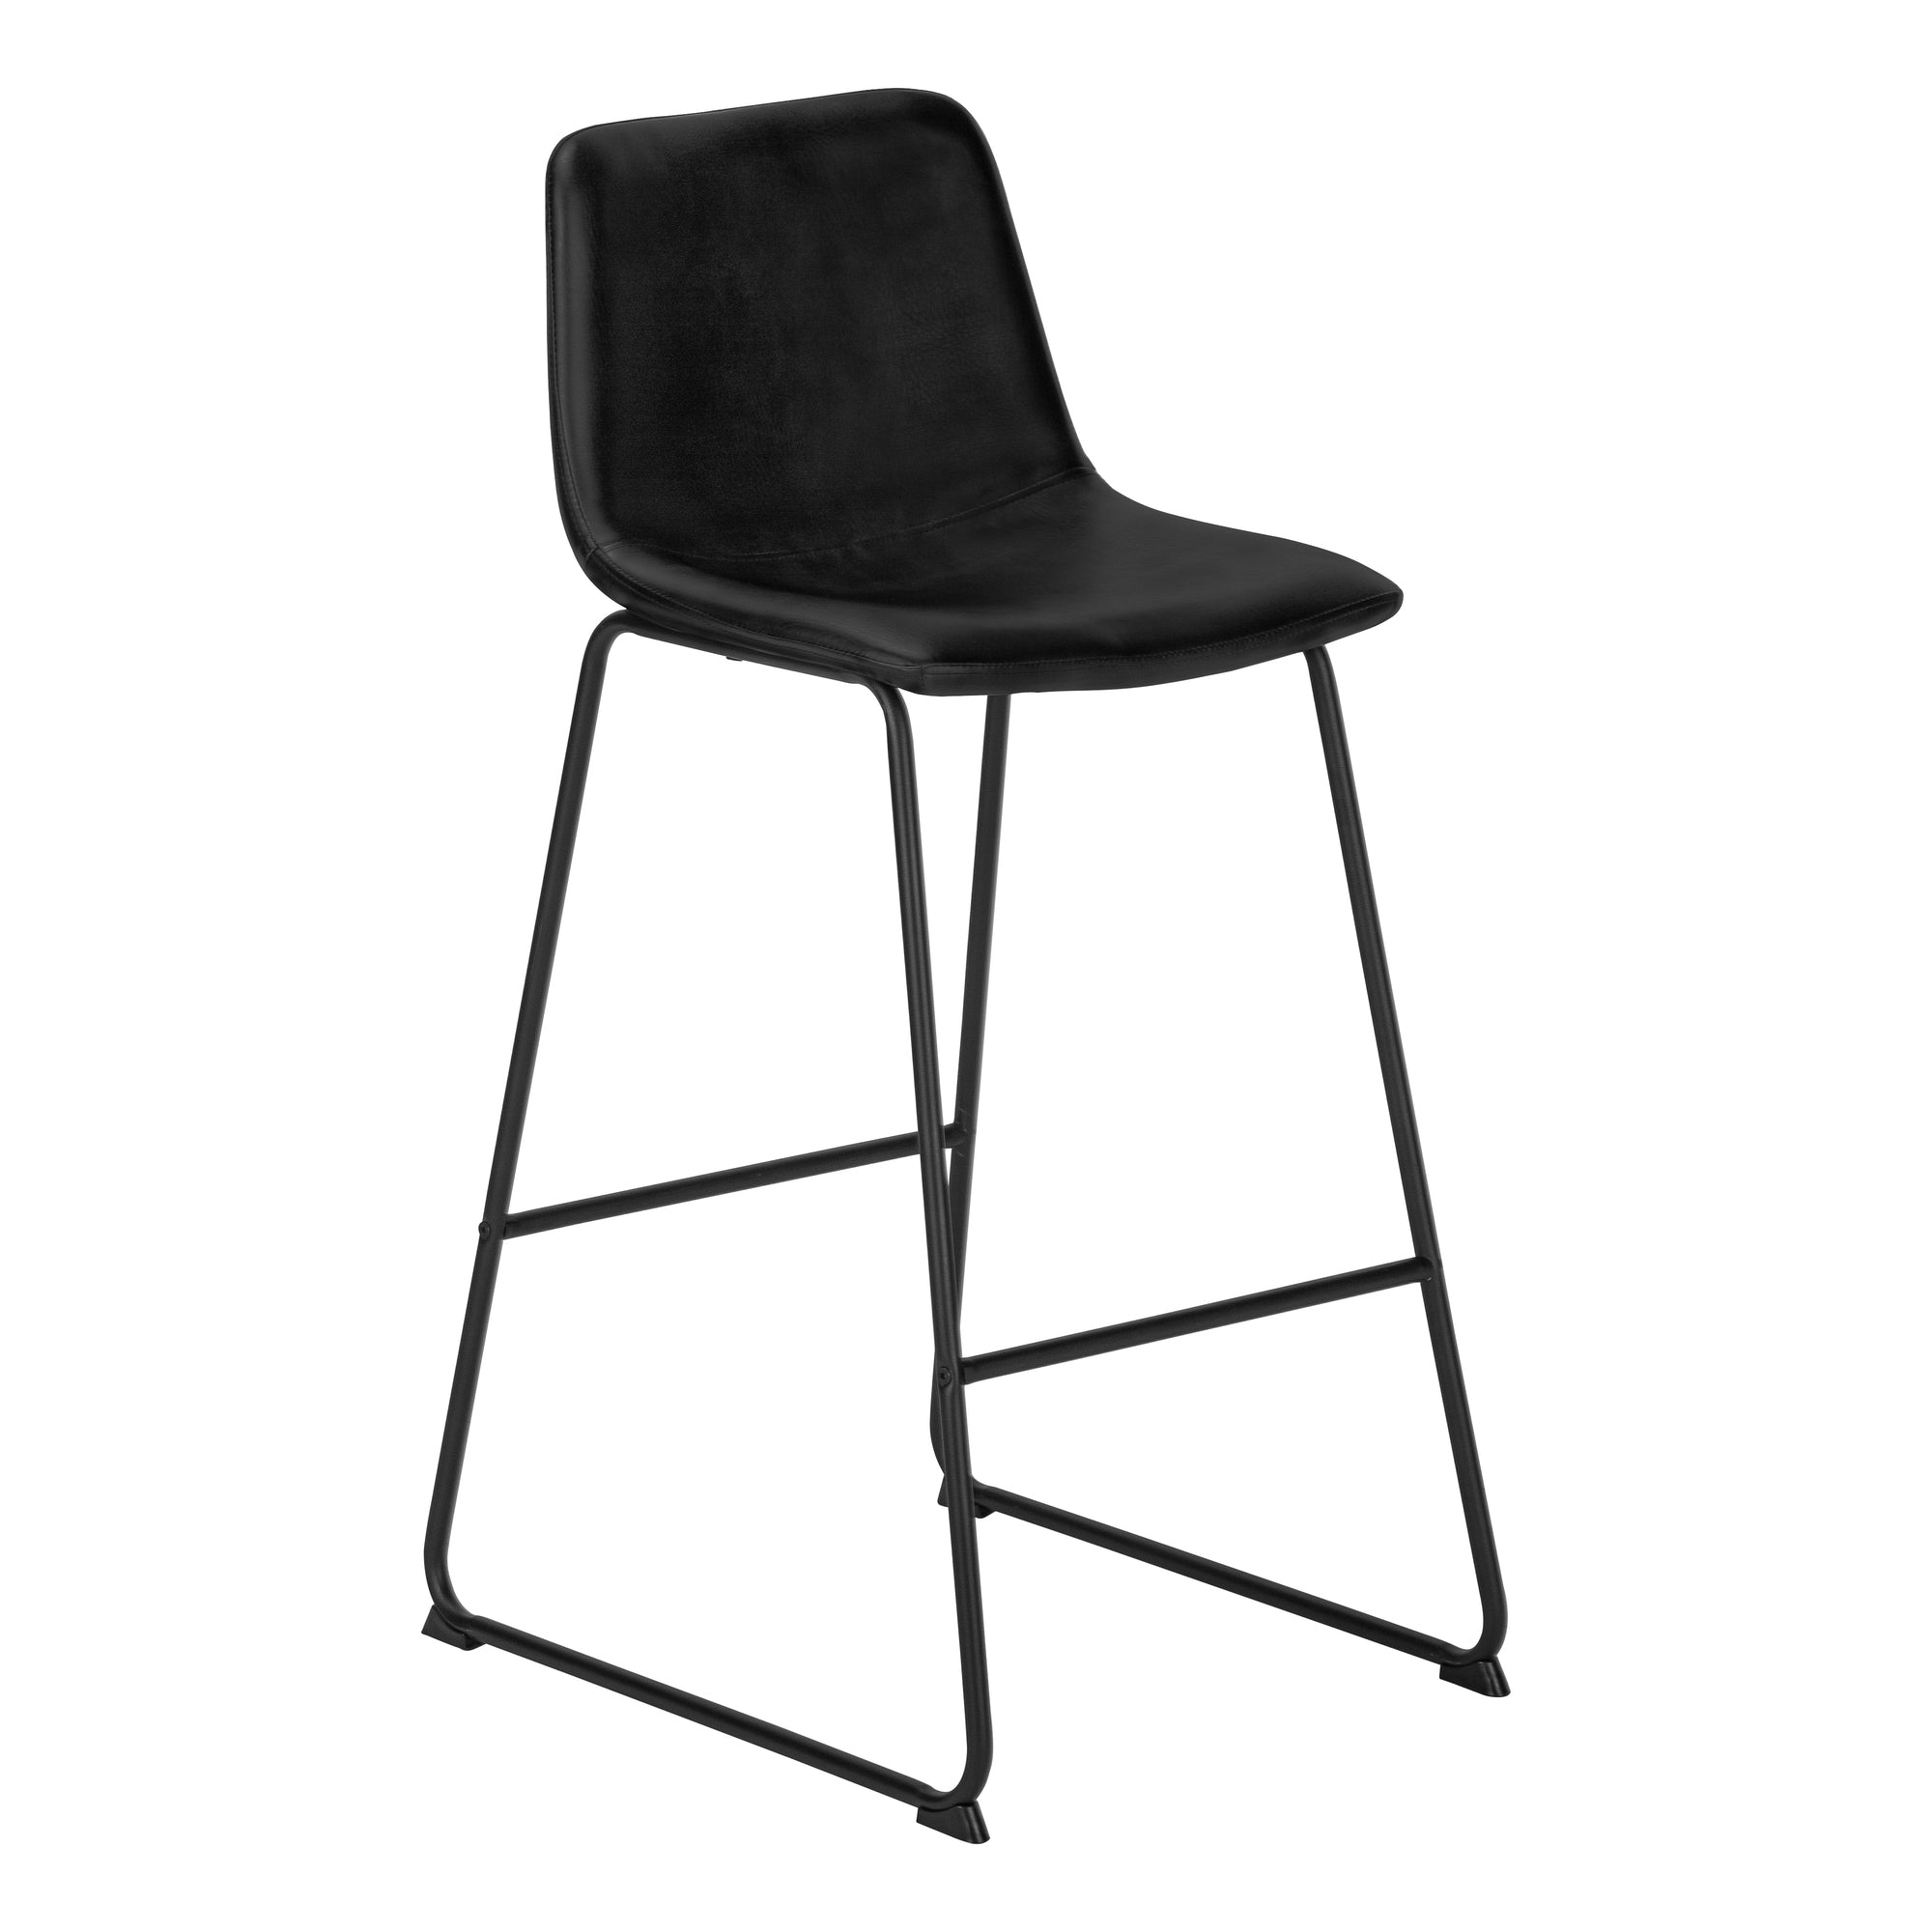 MN-137754    Office Chair - Standing Desk / Metal Frame - Curved Backrest / Black Leather-Look / Black